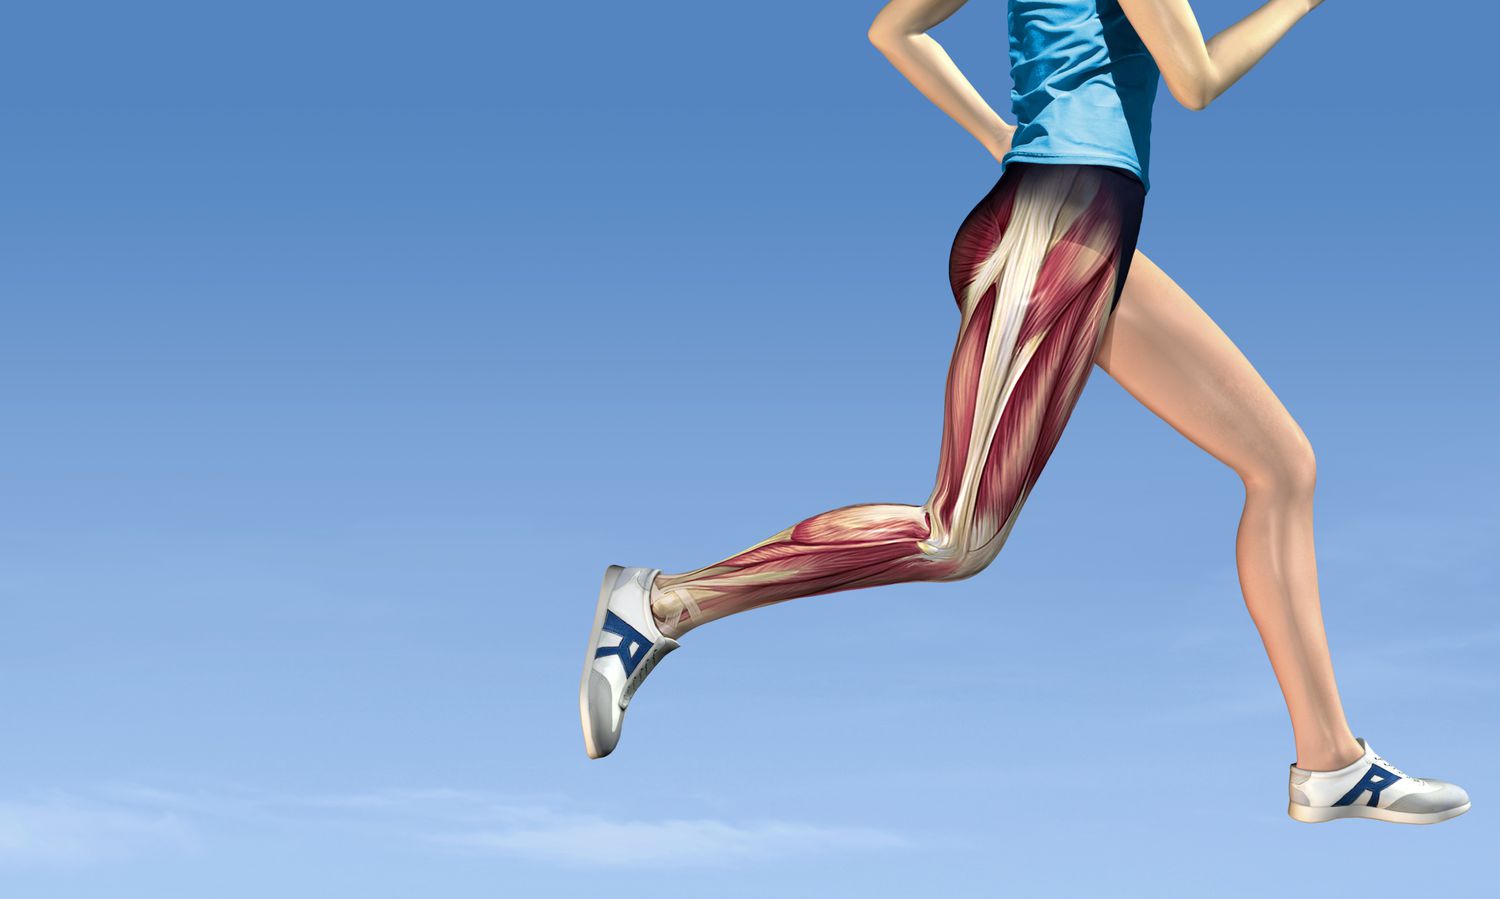 Common types of bursitis from running